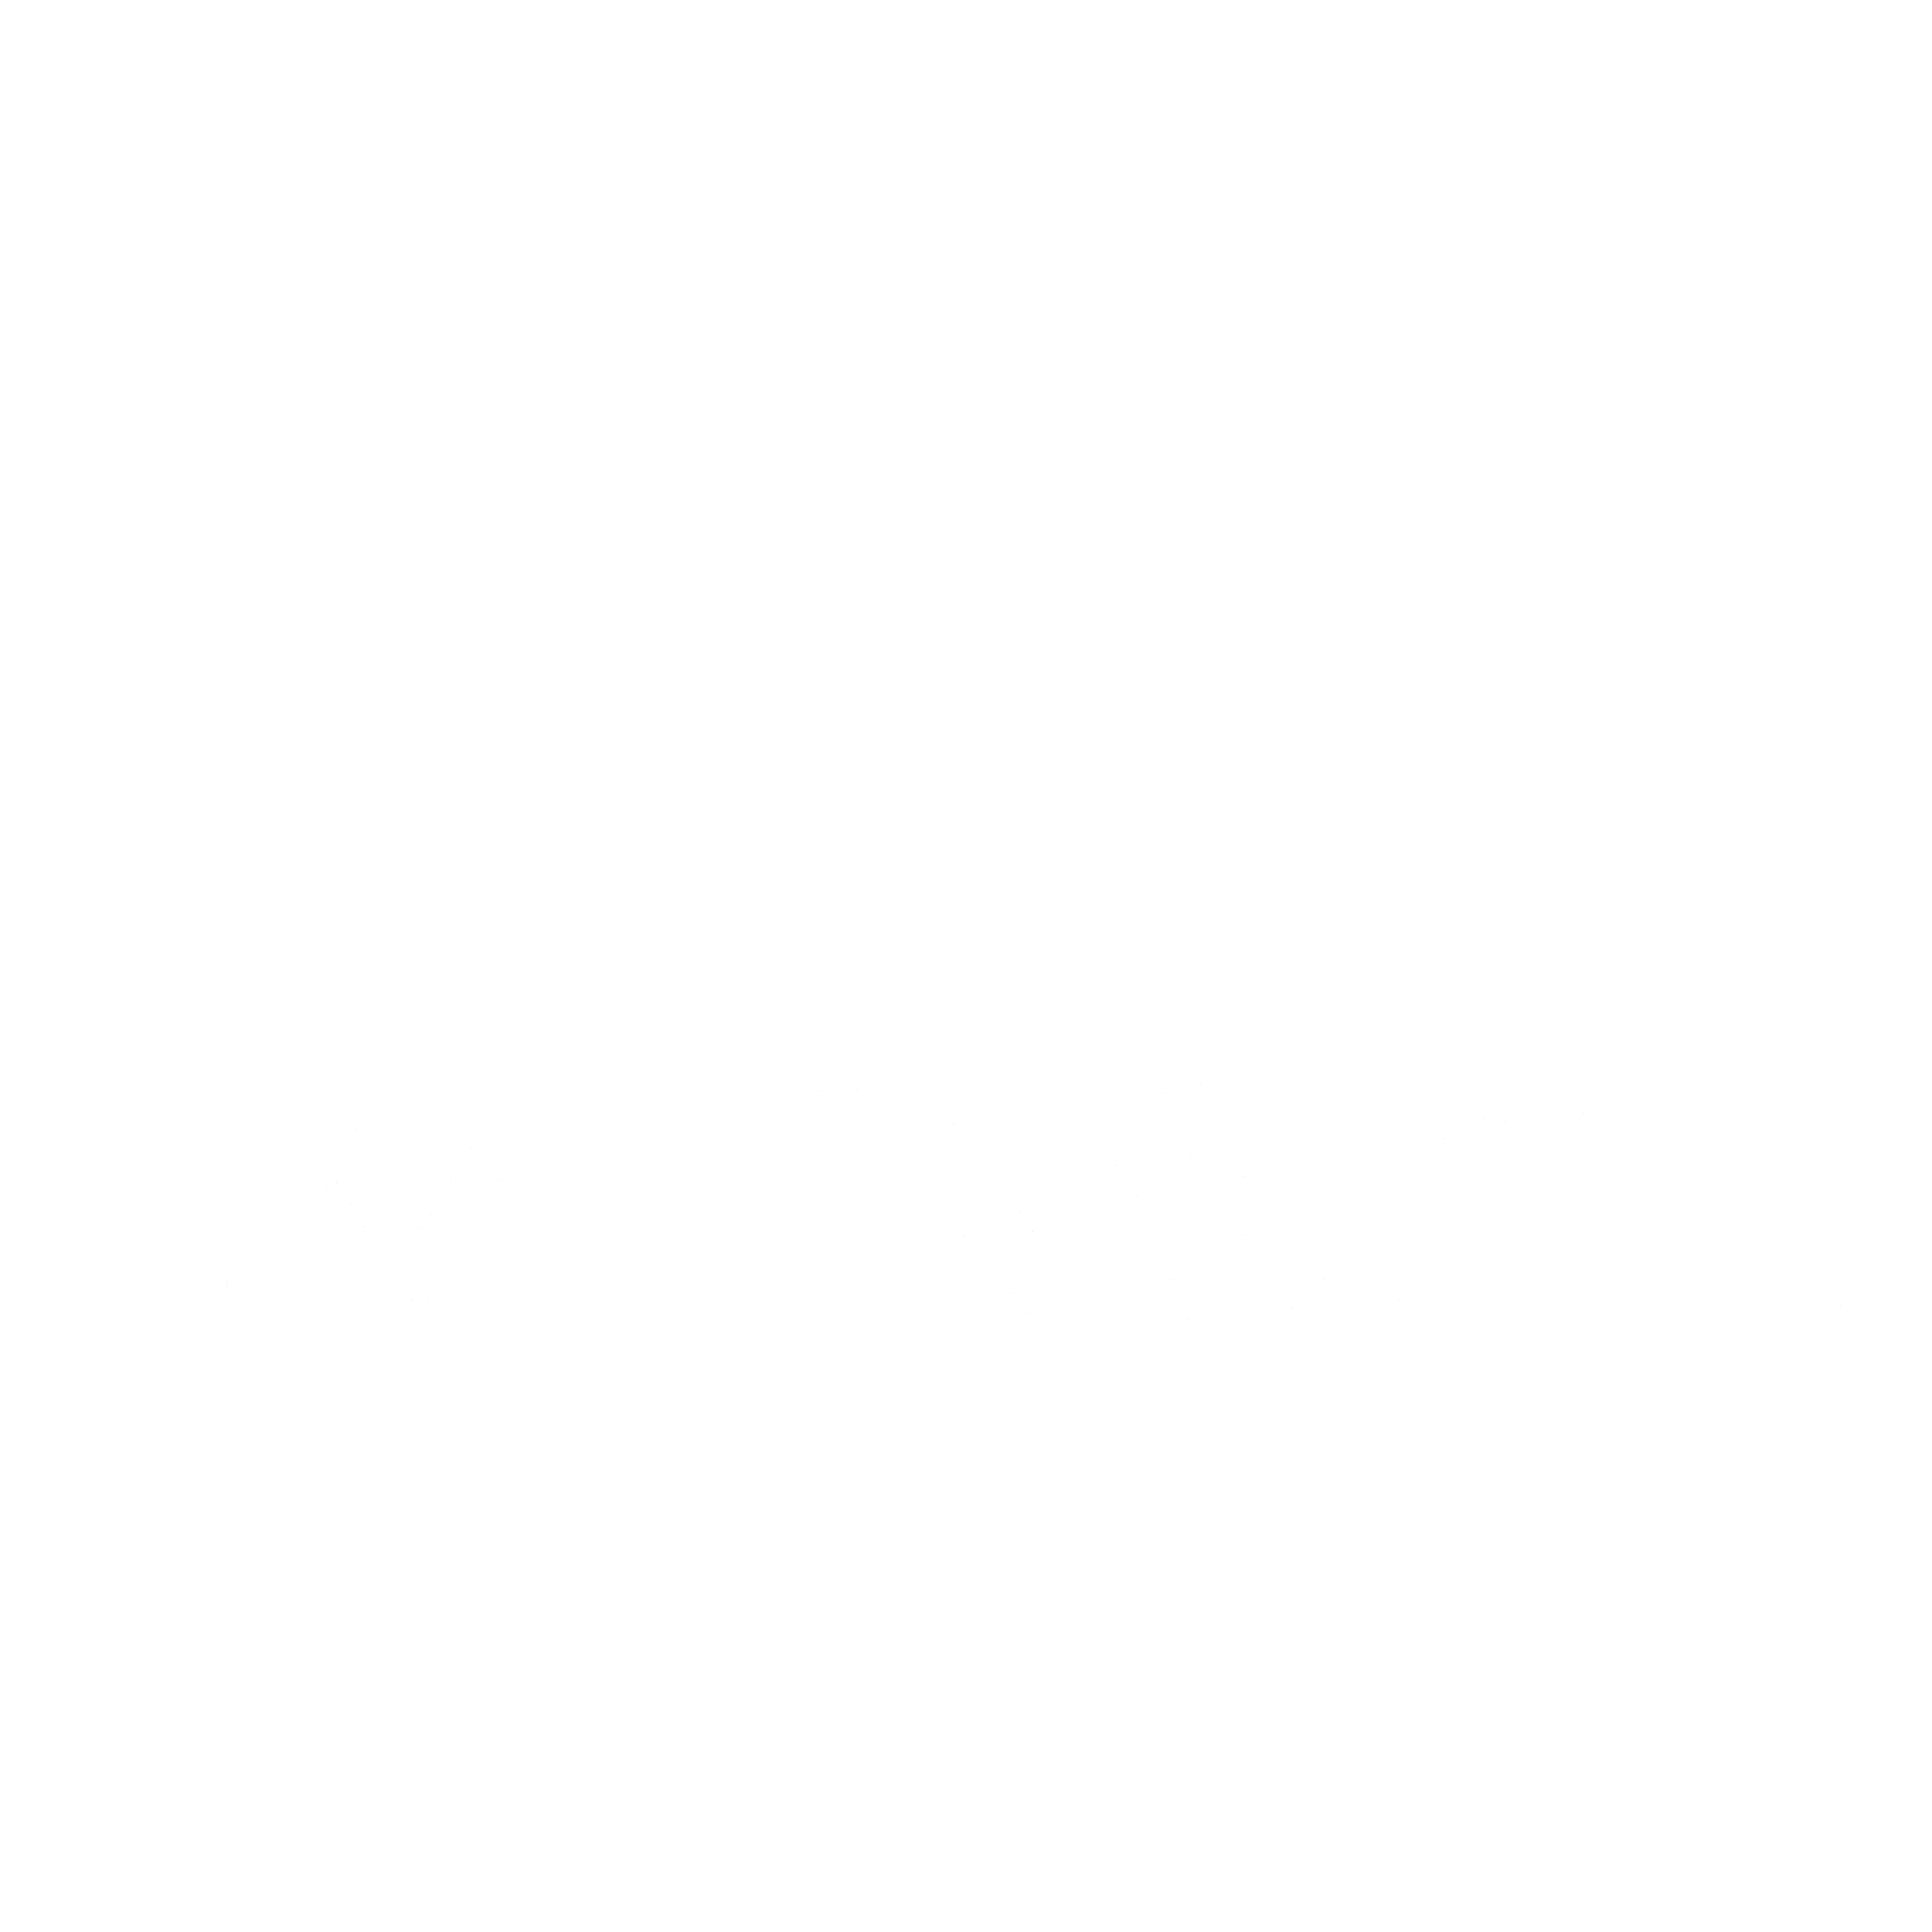 Emerson Electric Logo - Emerson Electric Logo PNG Transparent & SVG Vector - Freebie Supply